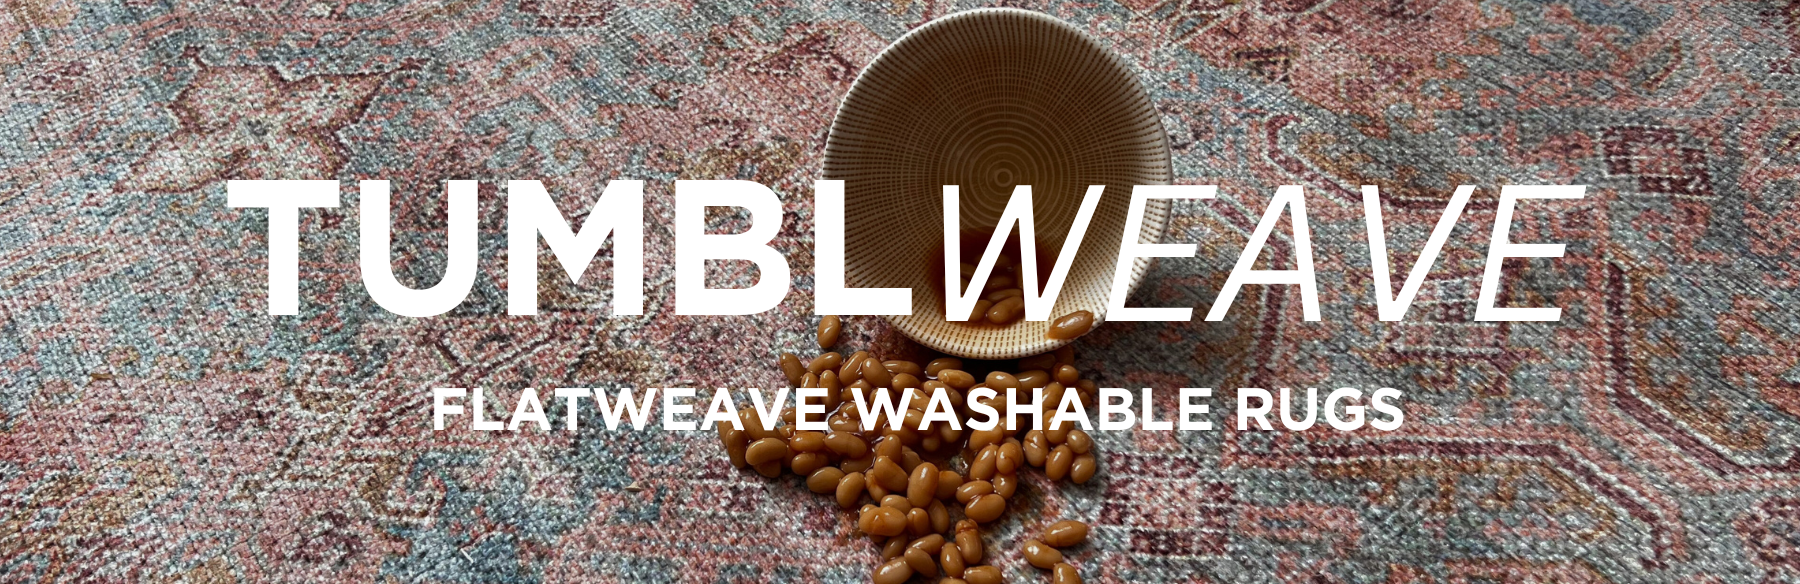 TUMBLweave: Flatweave Washable Rugs